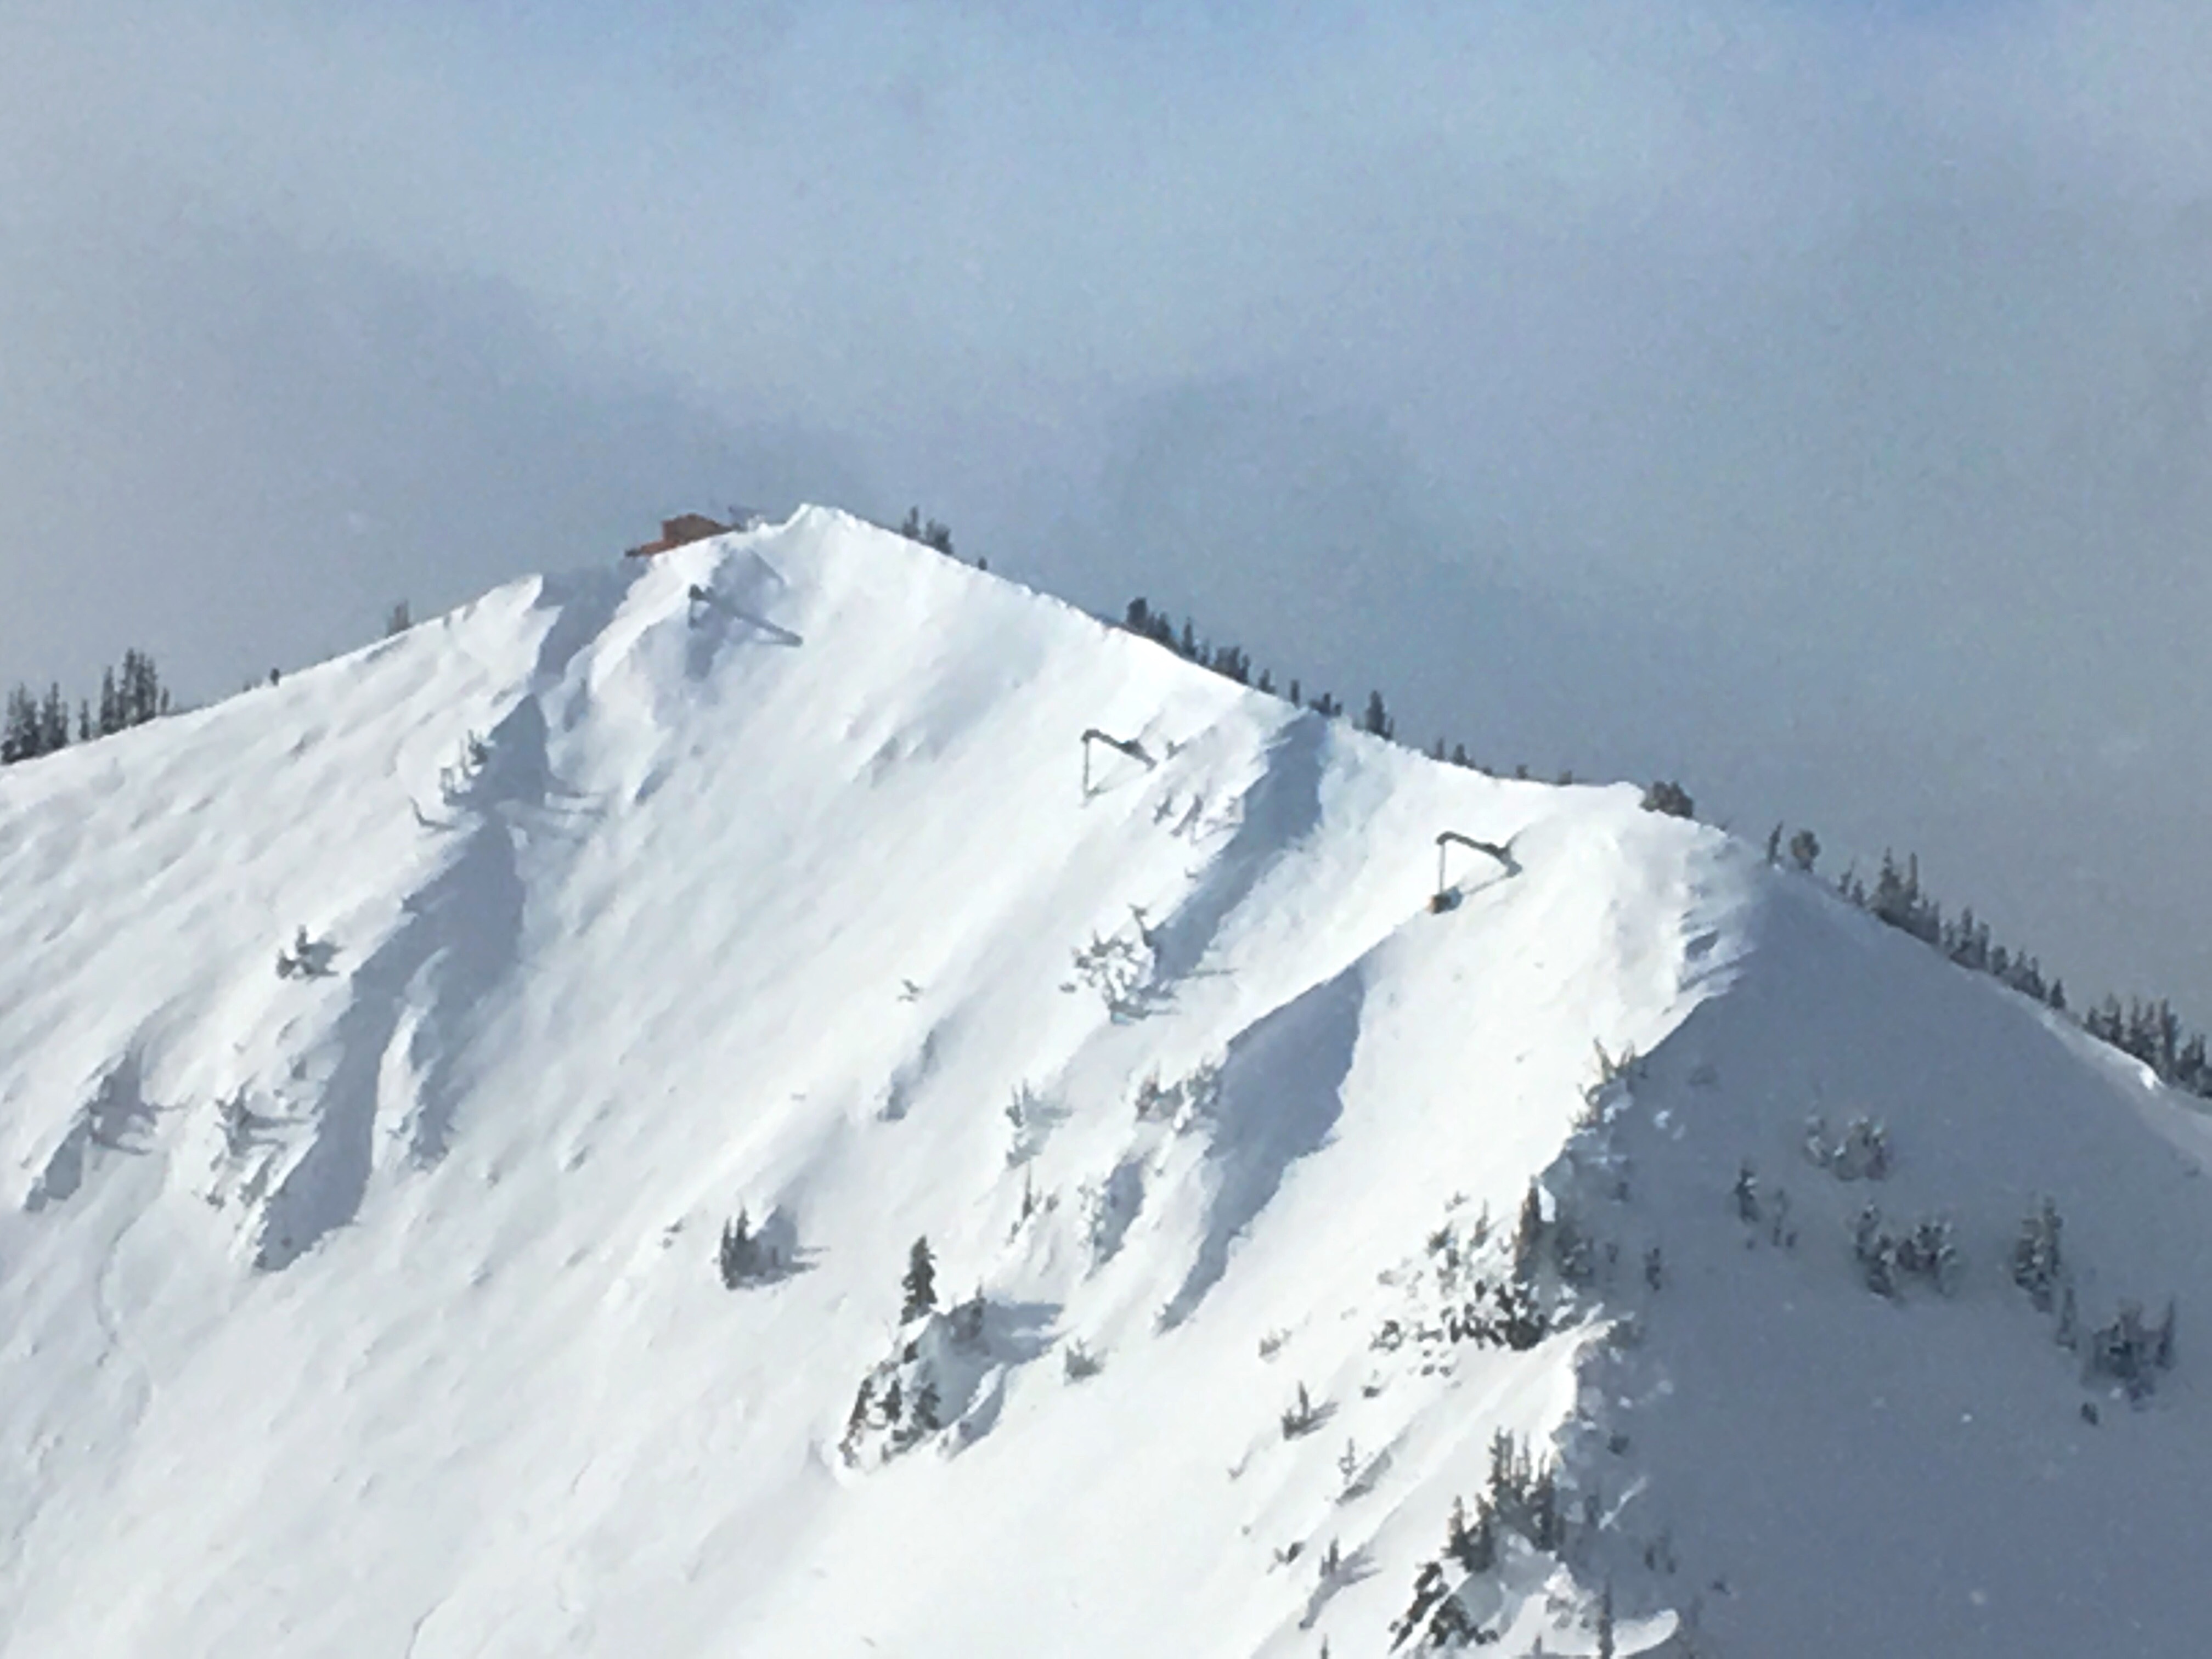 Detail of the Gaz-ex installed at Powder Bowl - photos by Kim Kirchner. High prone avalanche terrain